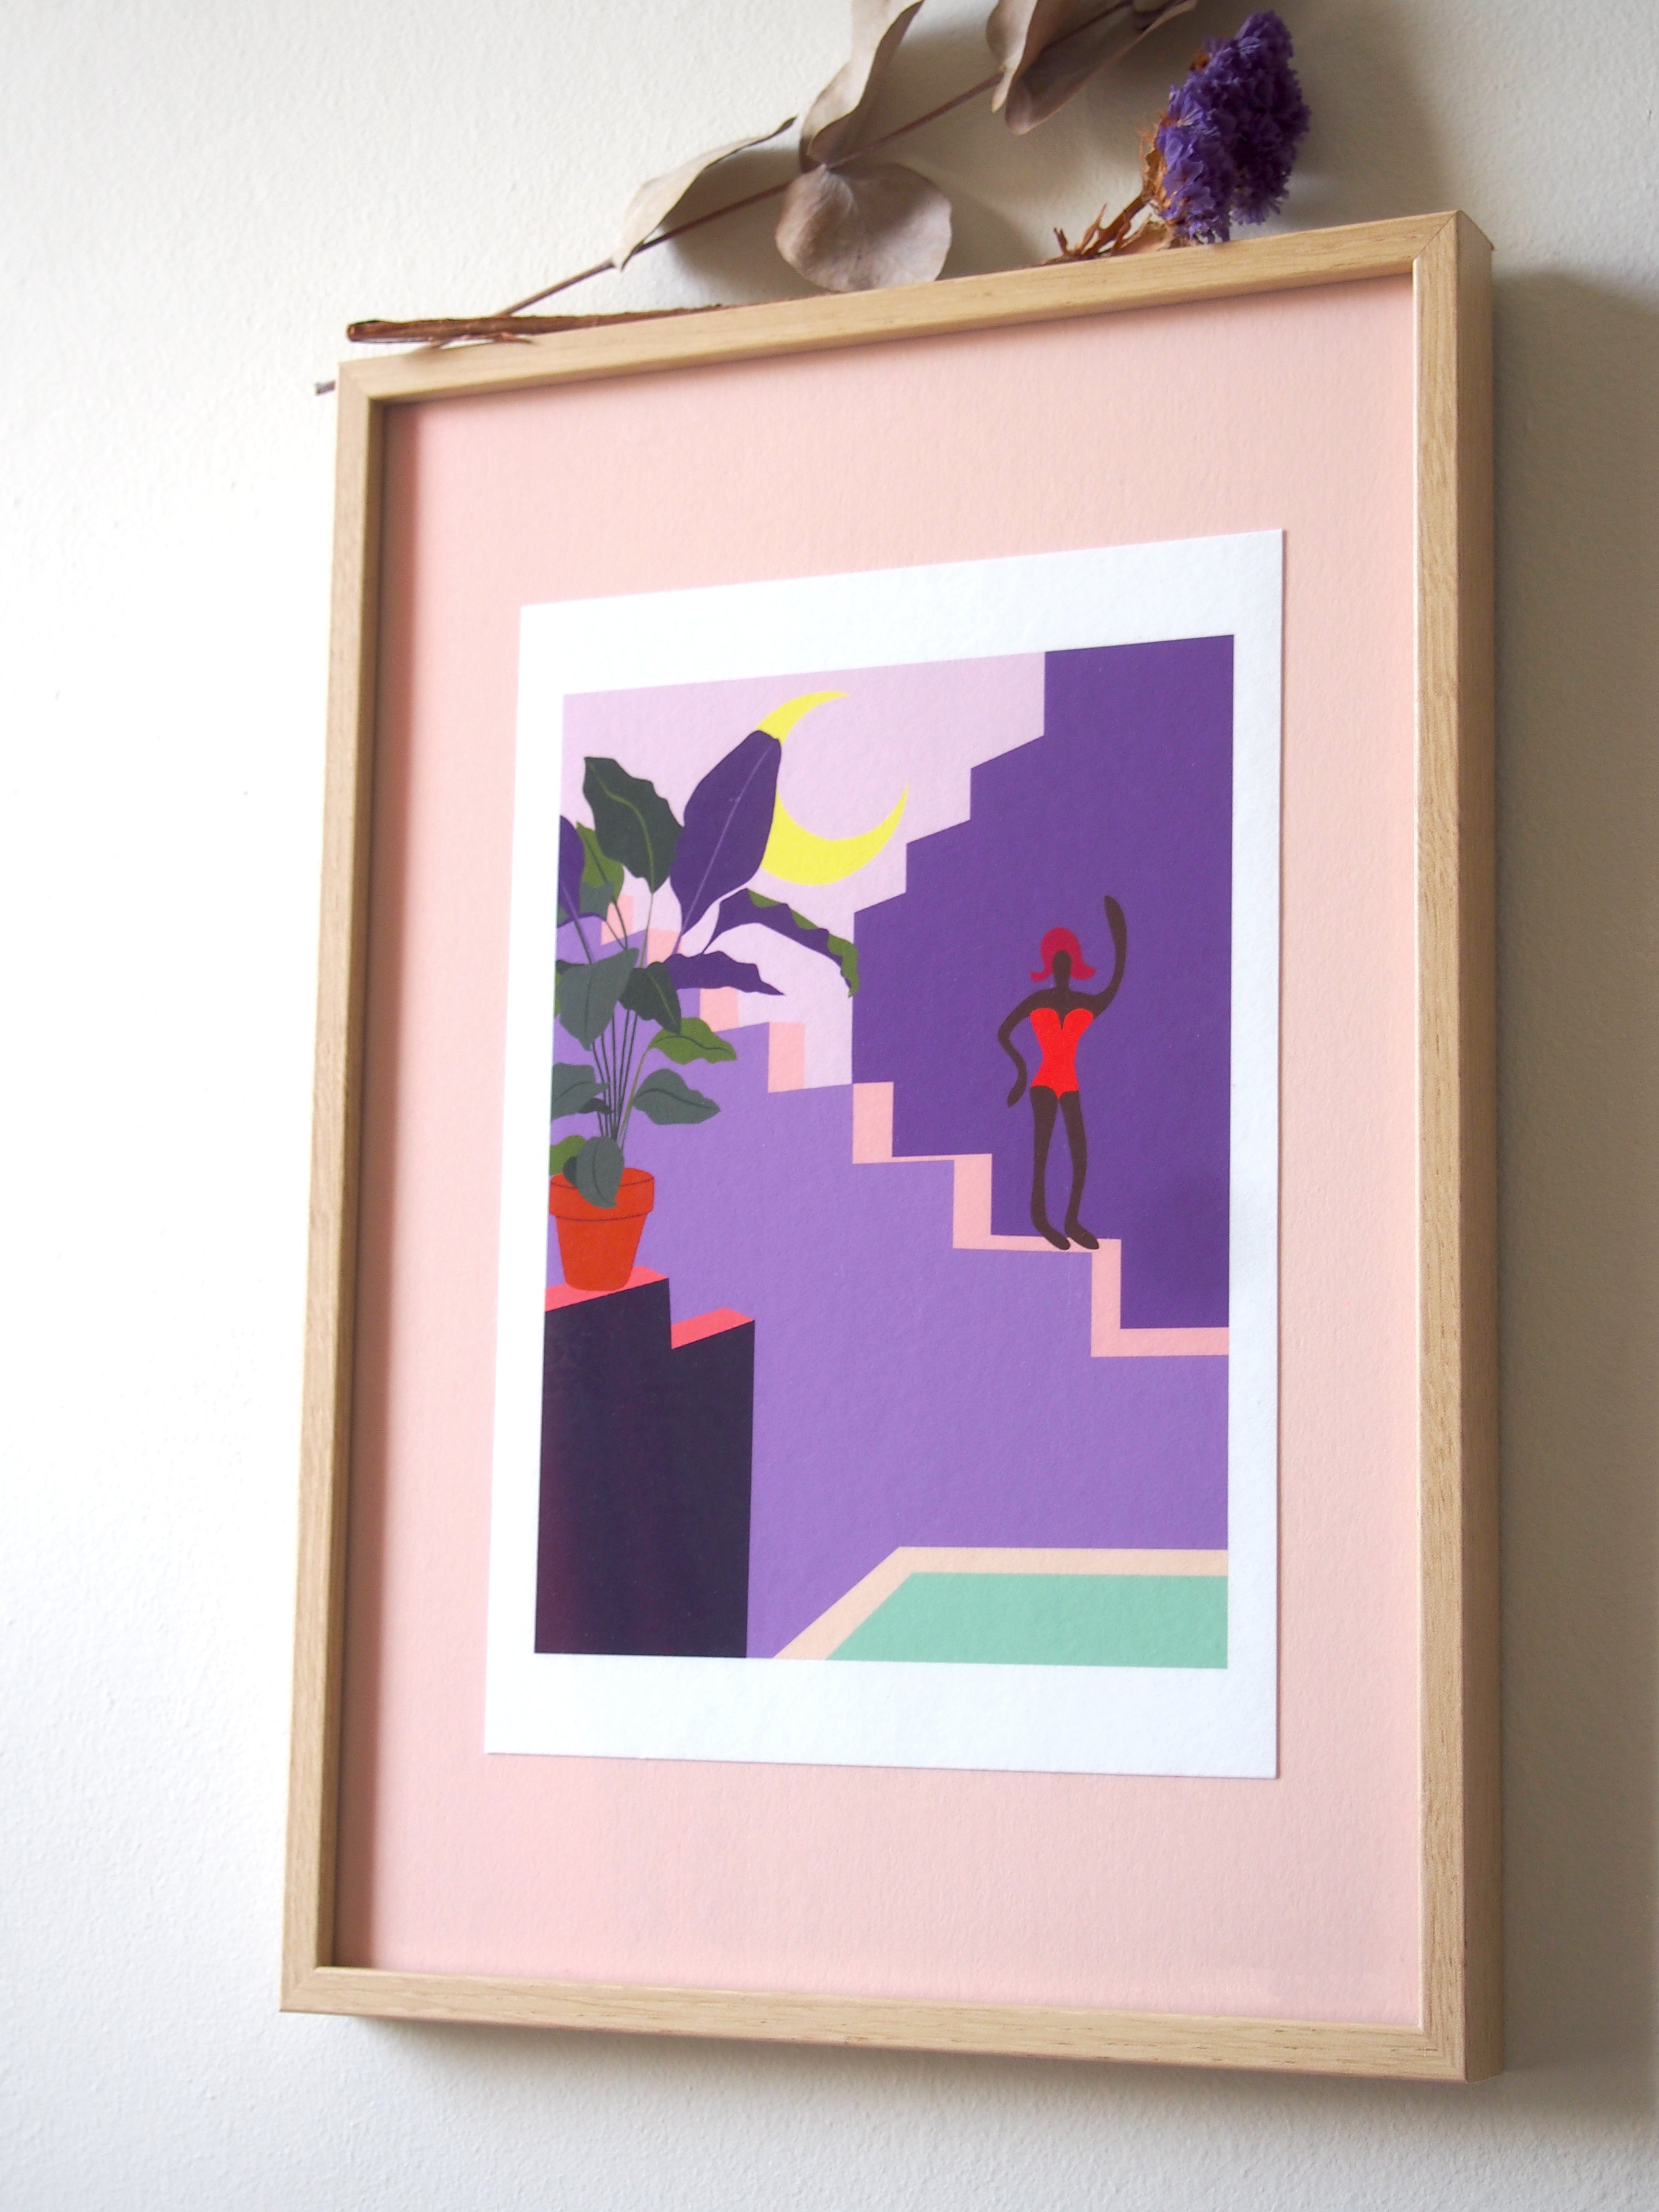 Purple stairs print